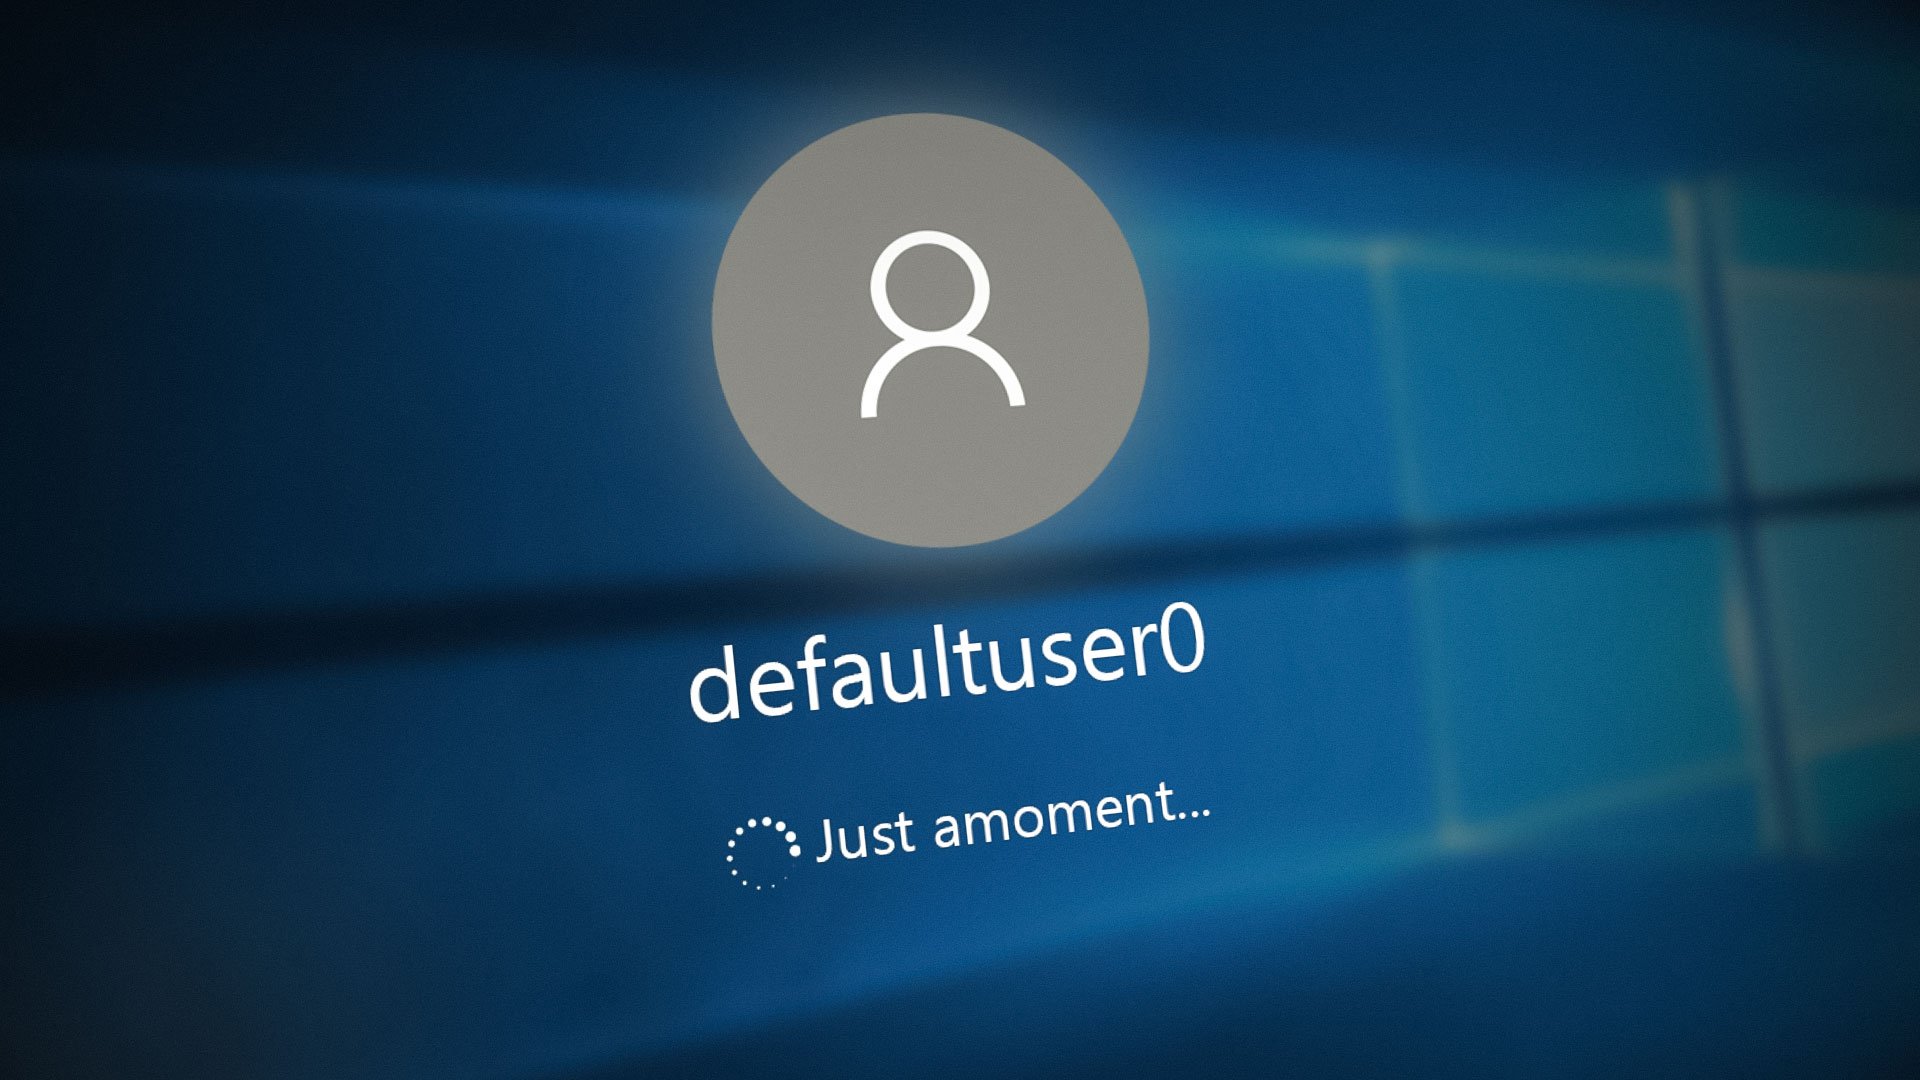 How to Remove Defaultuser0 Password on Windows